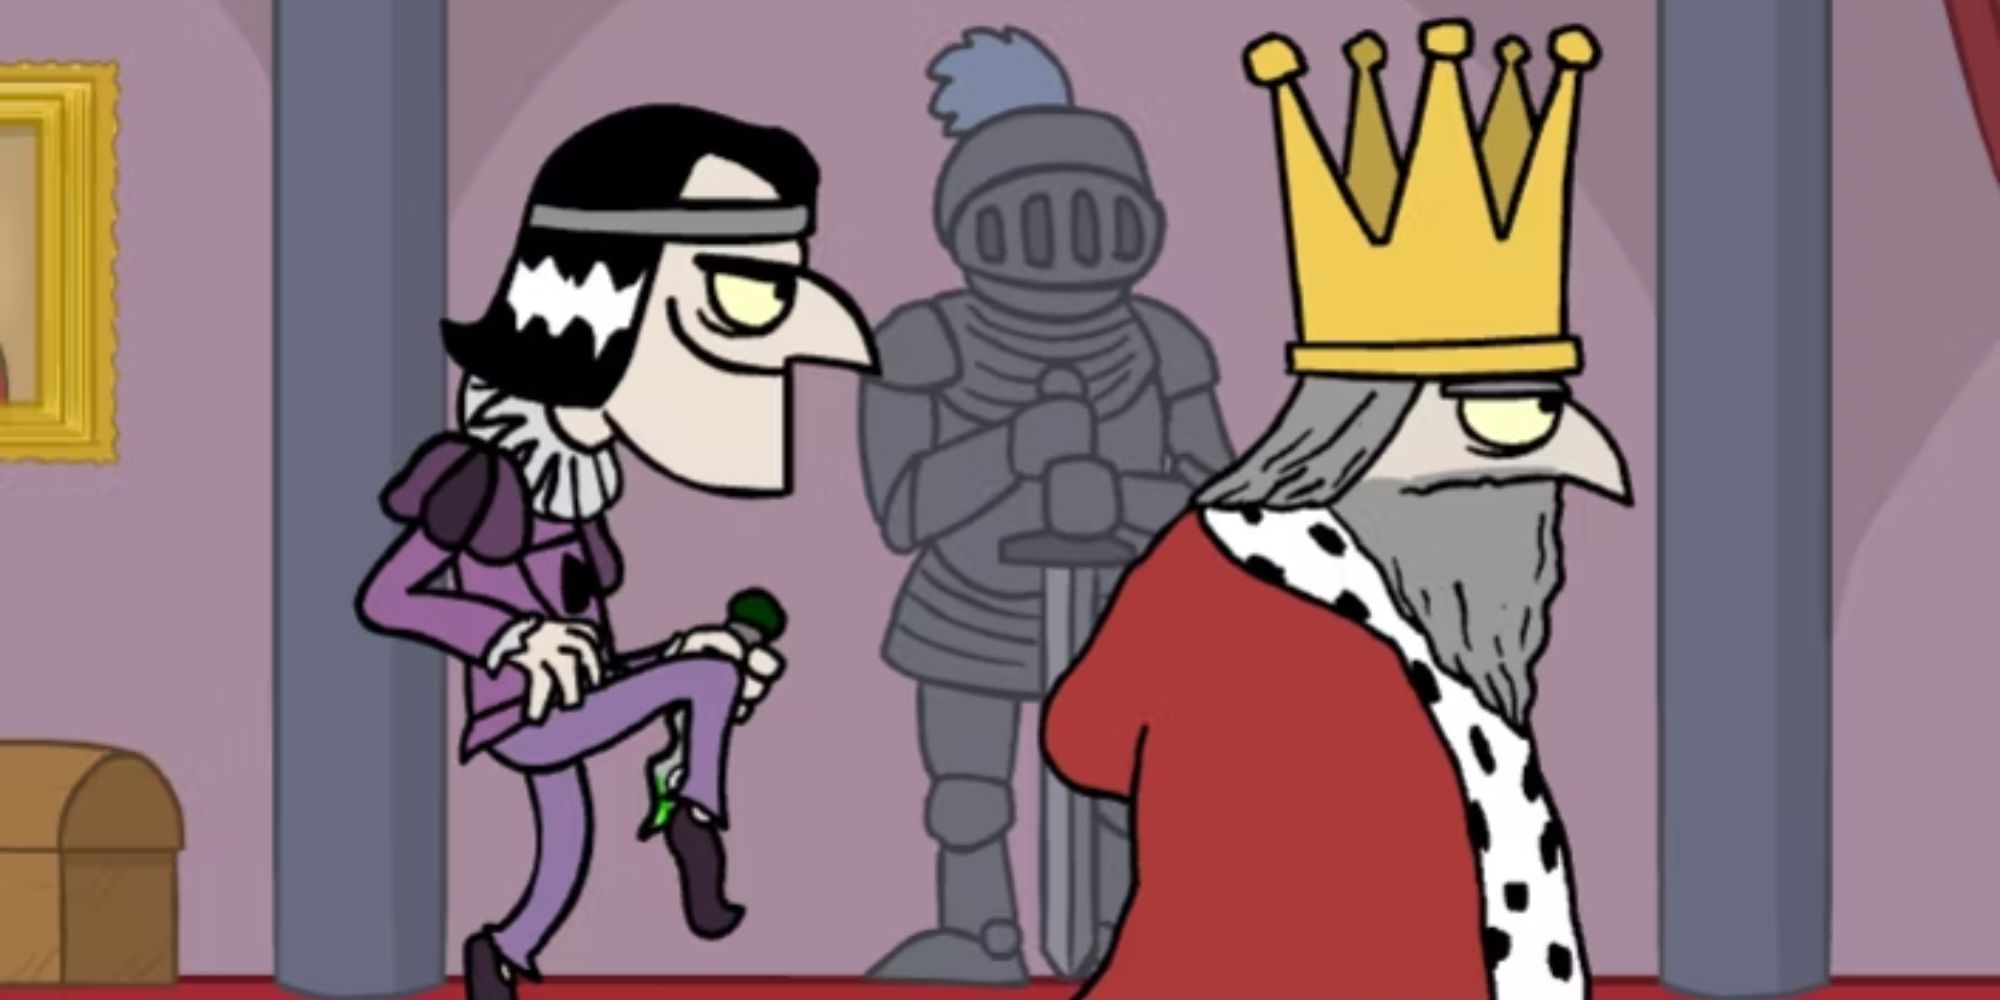 Murder Game king and assasin in purple walking through a hallway